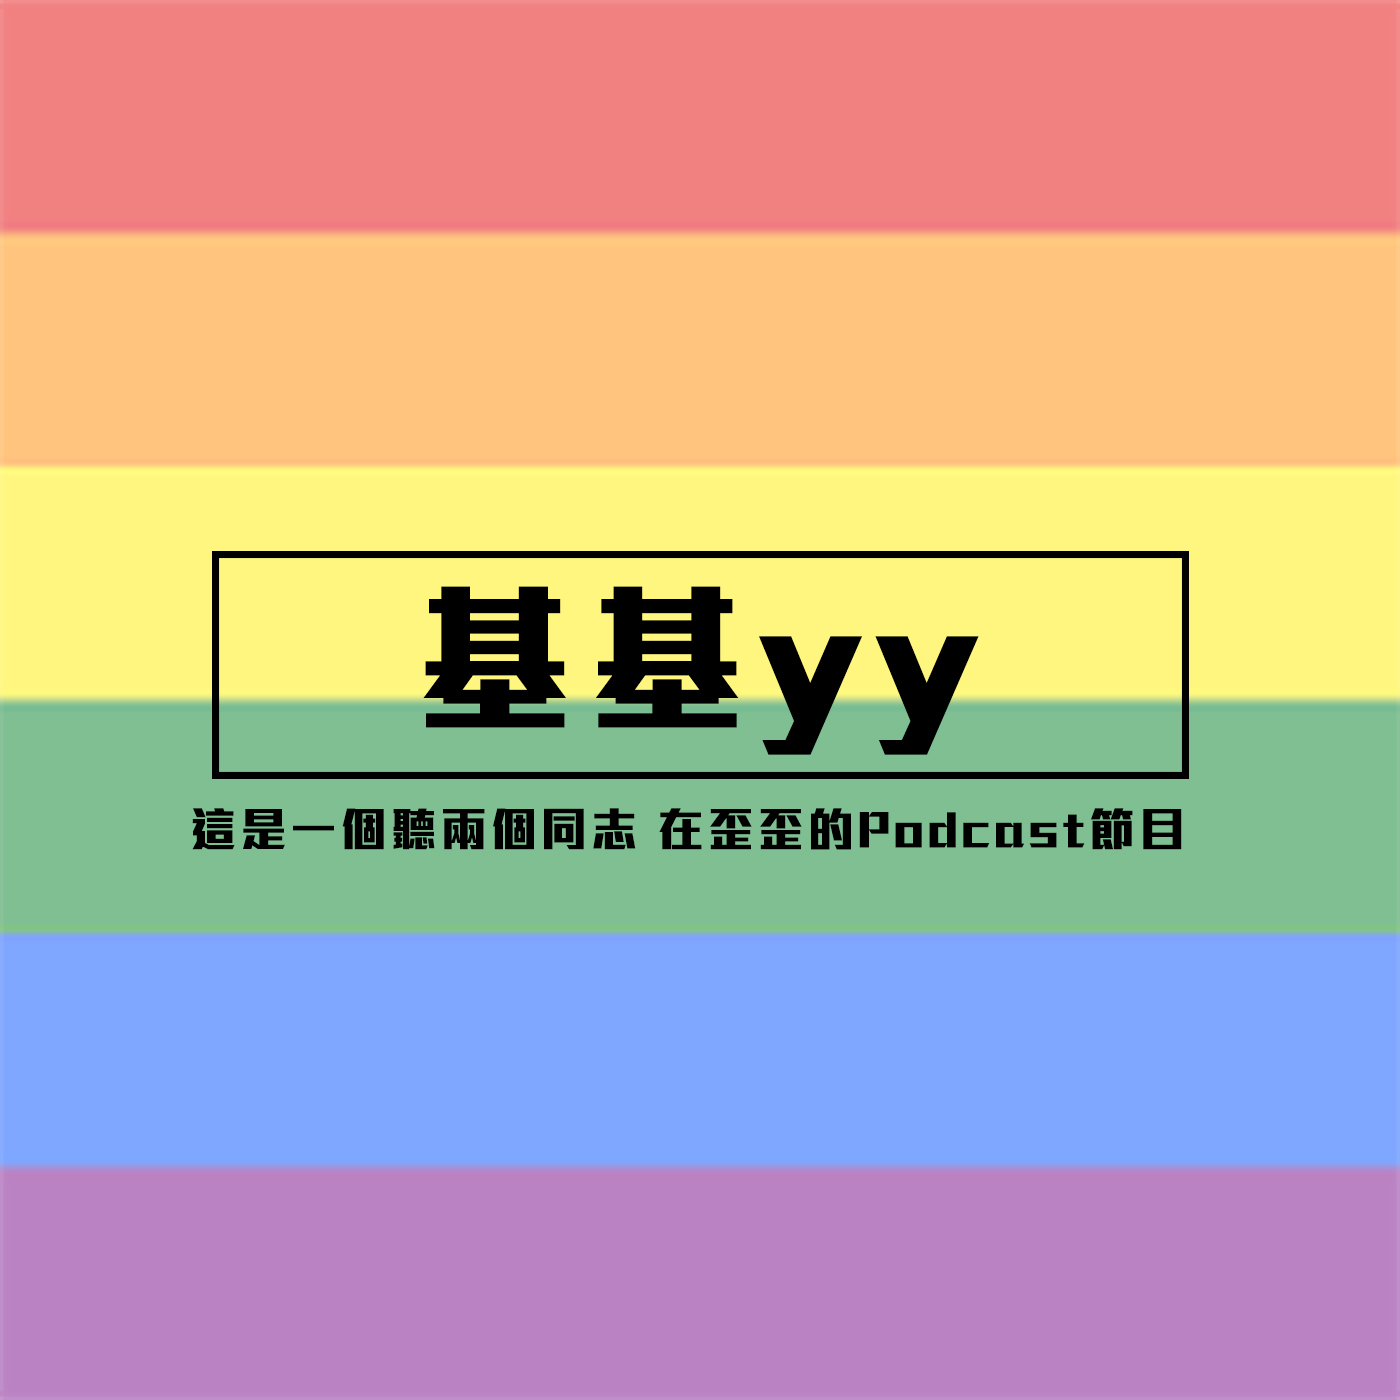 基基yy | Ep 16 交友軟體的大型NG現場 feat. Gary